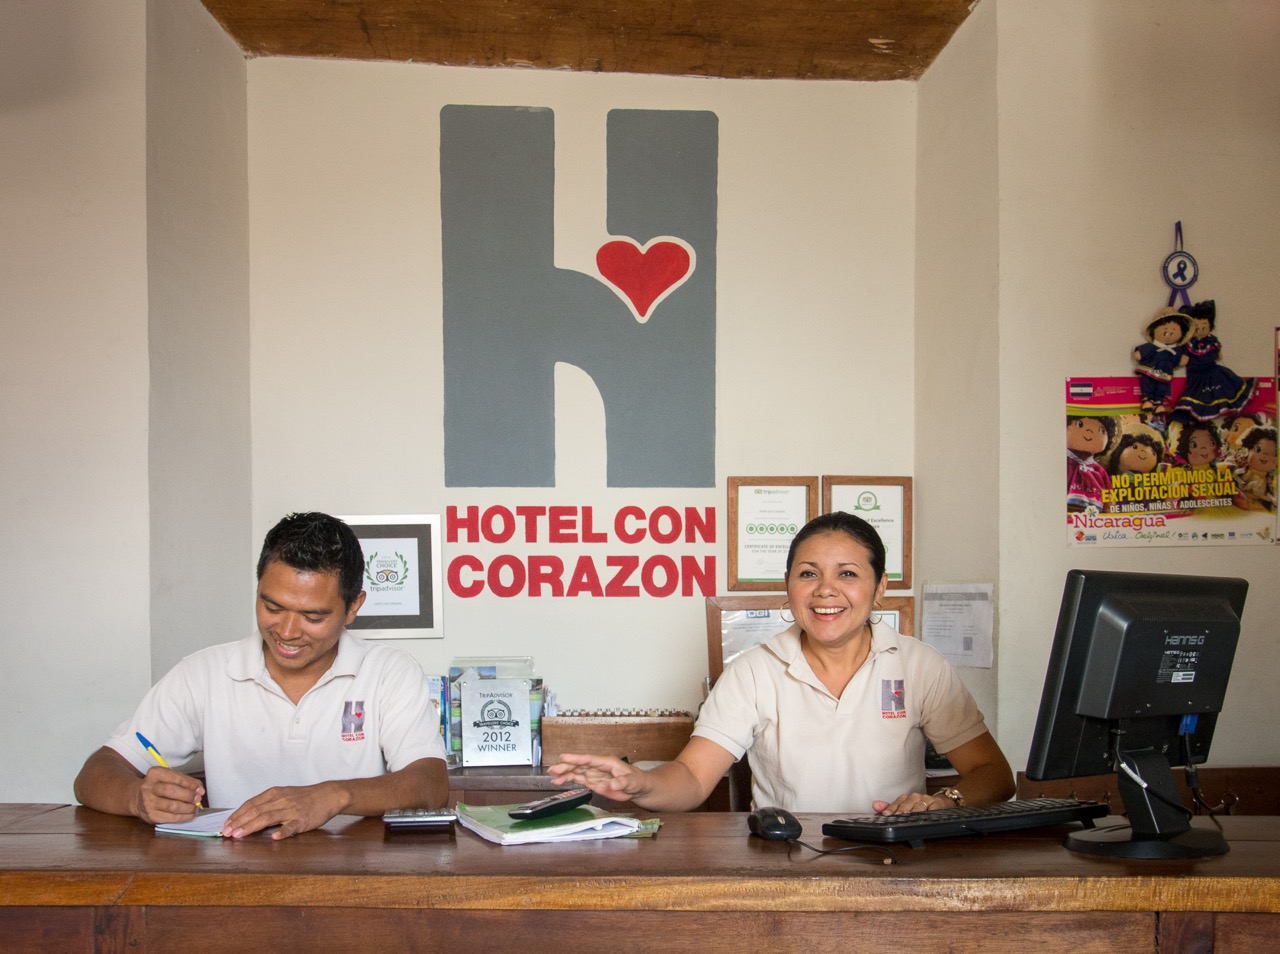 Hotel con Corazón - Hospitality Brand Purpose - Content Marketing Strategy